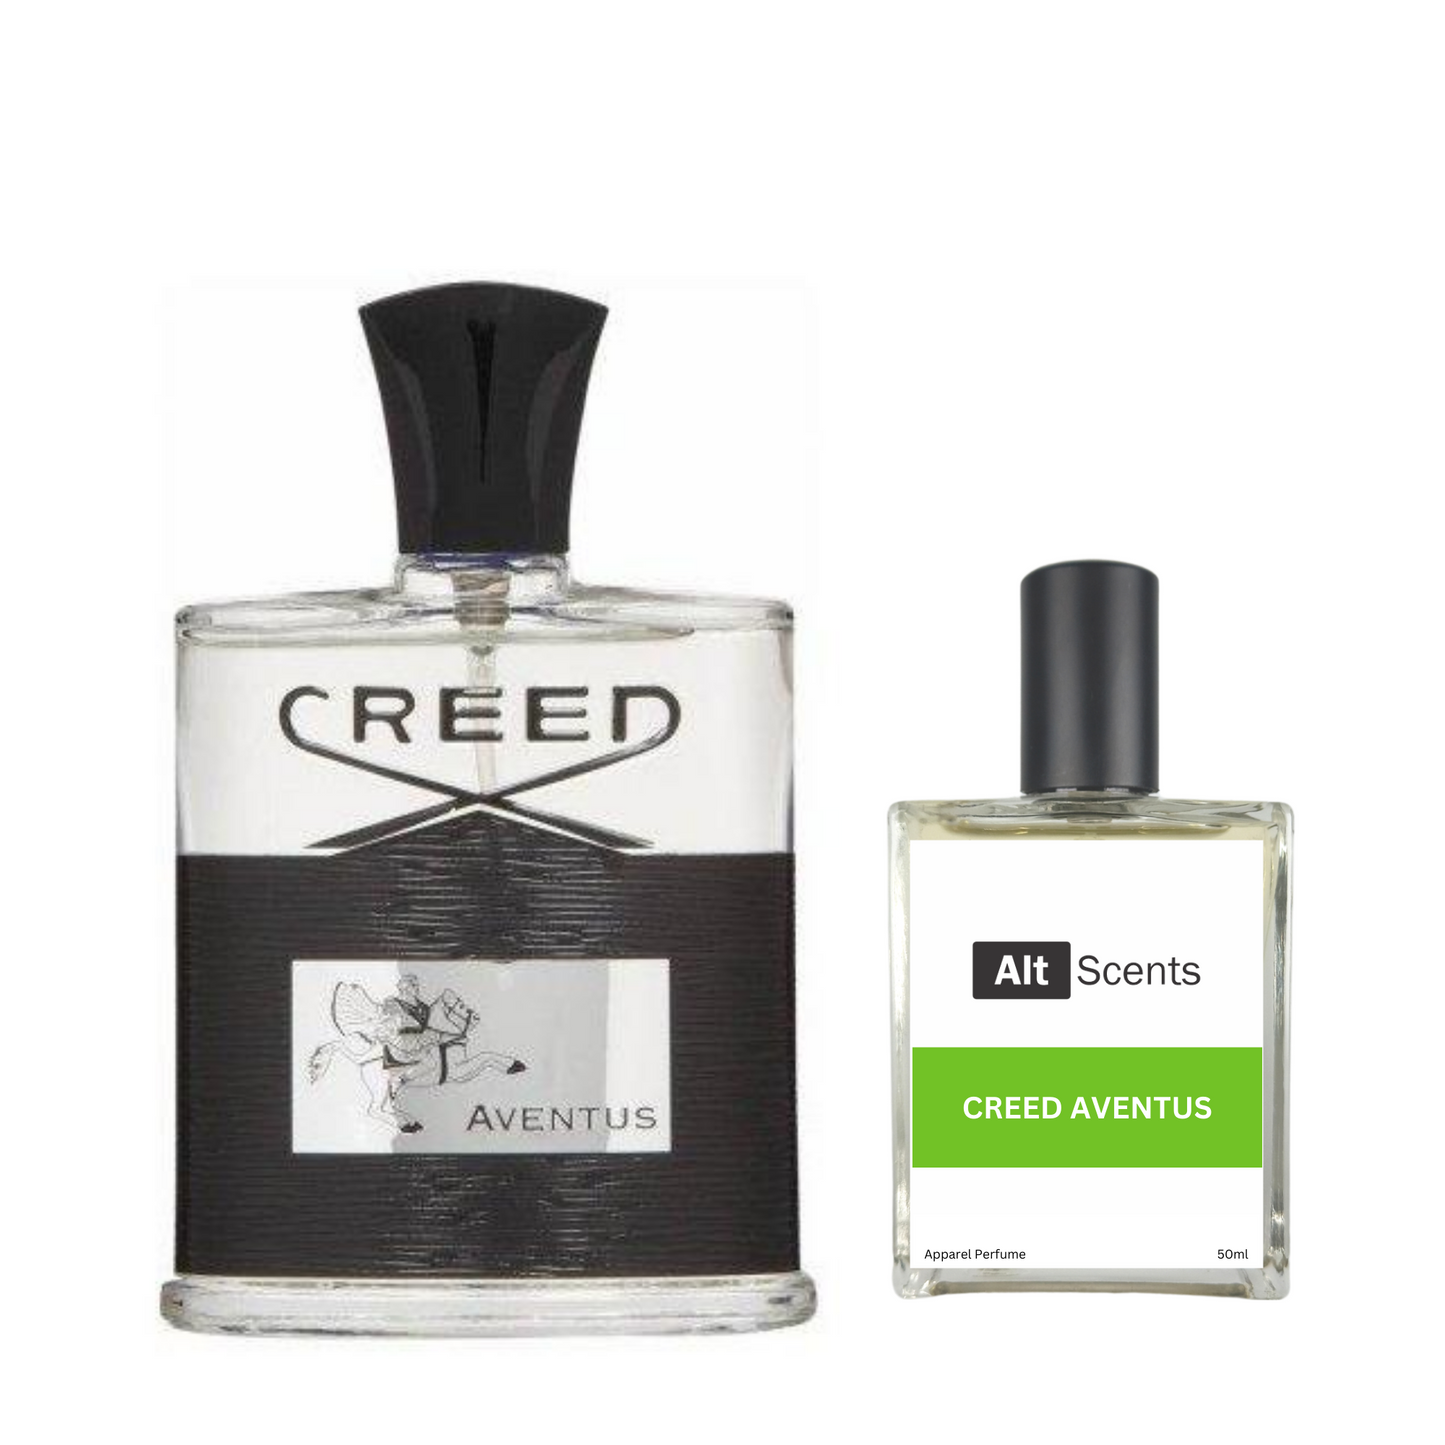 Creed Aventus type Perfume